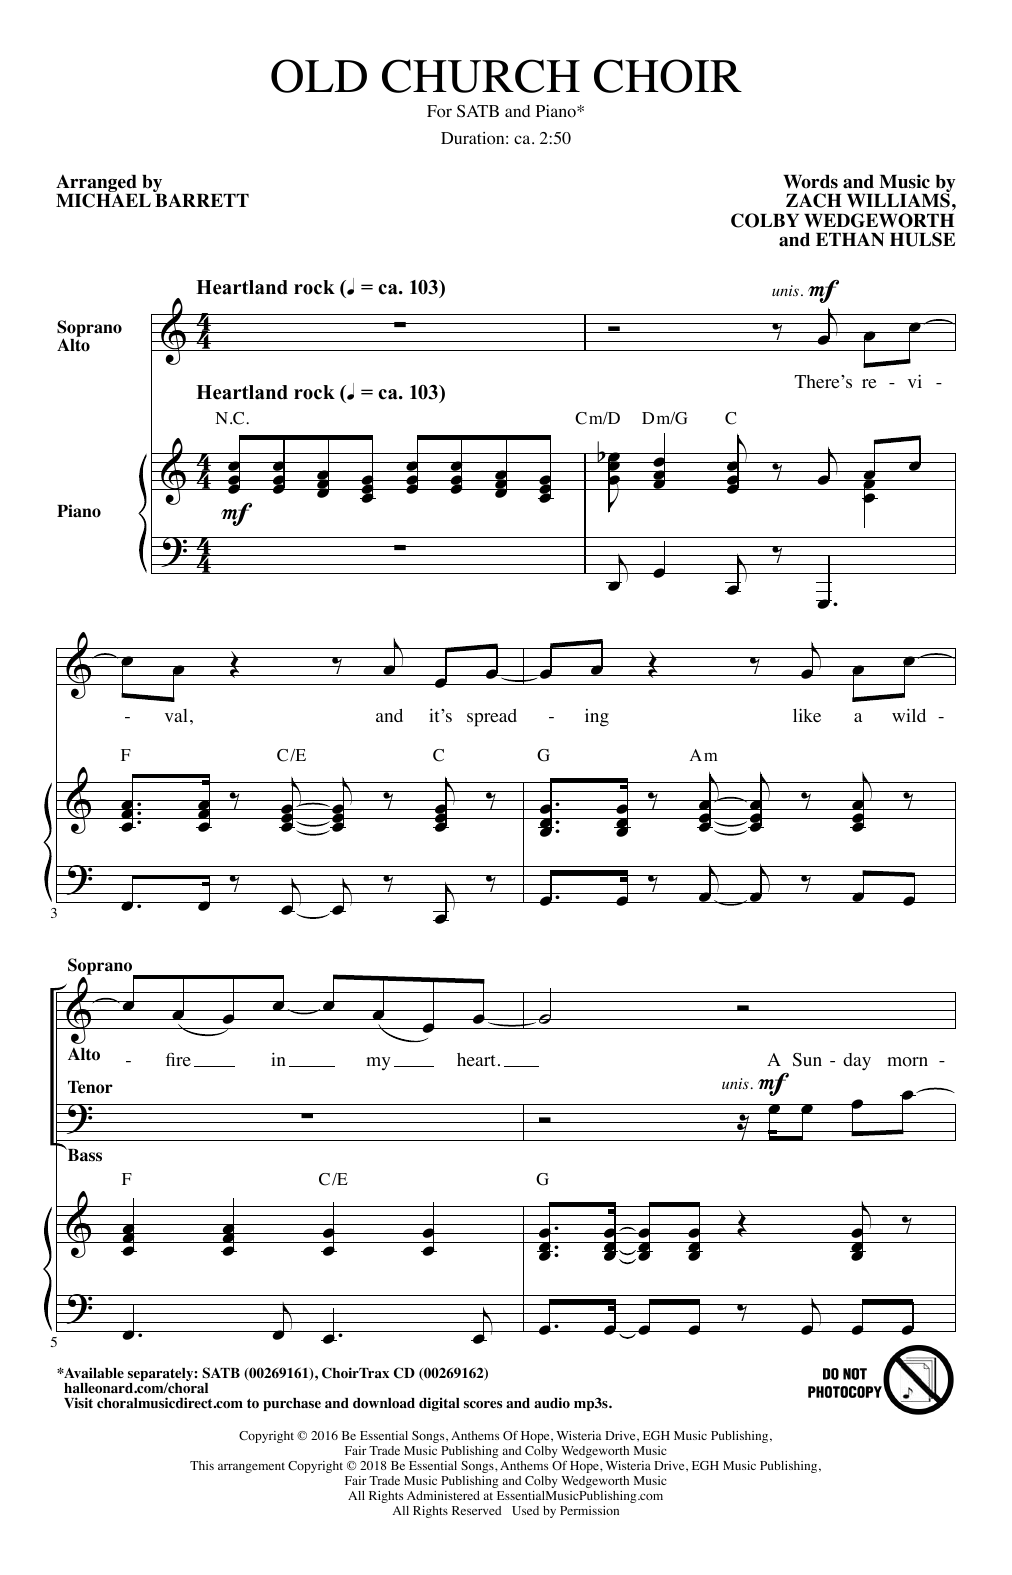 Download Zach Williams Old Church Choir (arr. Michael Barrett) Sheet Music and learn how to play SATB Choir PDF digital score in minutes